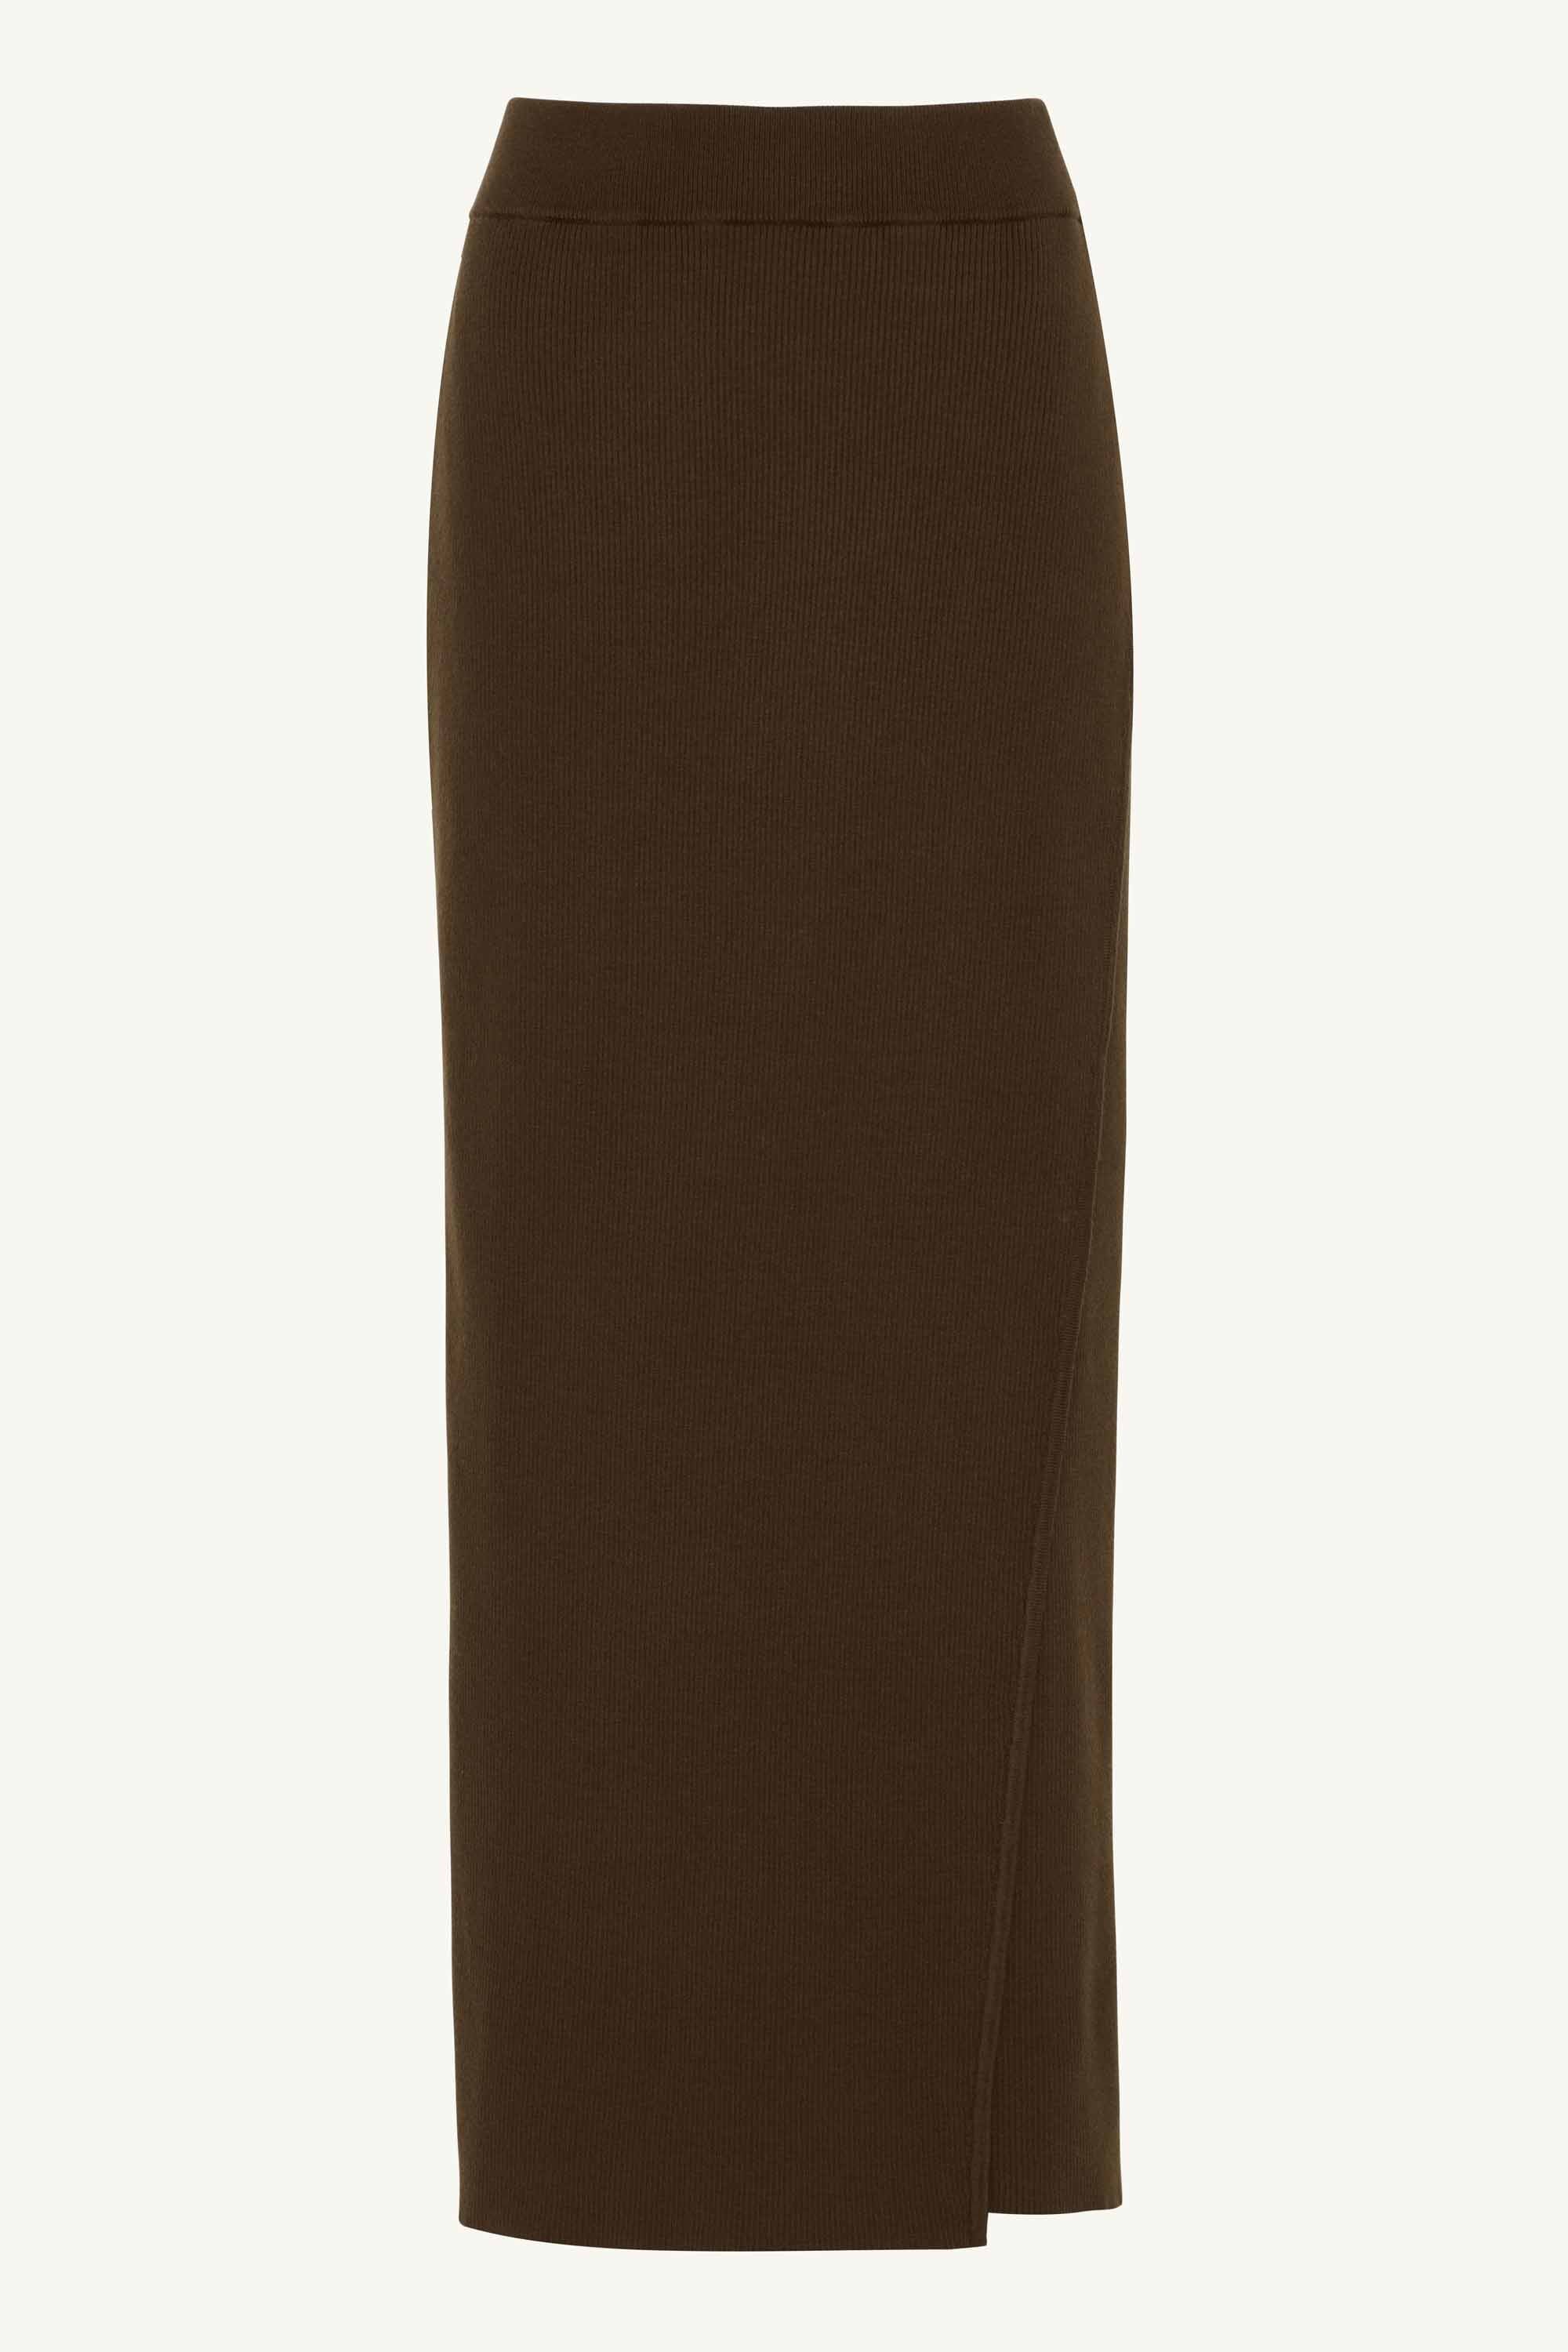 Alara Faux Wrap Knit Maxi Skirt - Chocolate Brown Clothing epschoolboard 